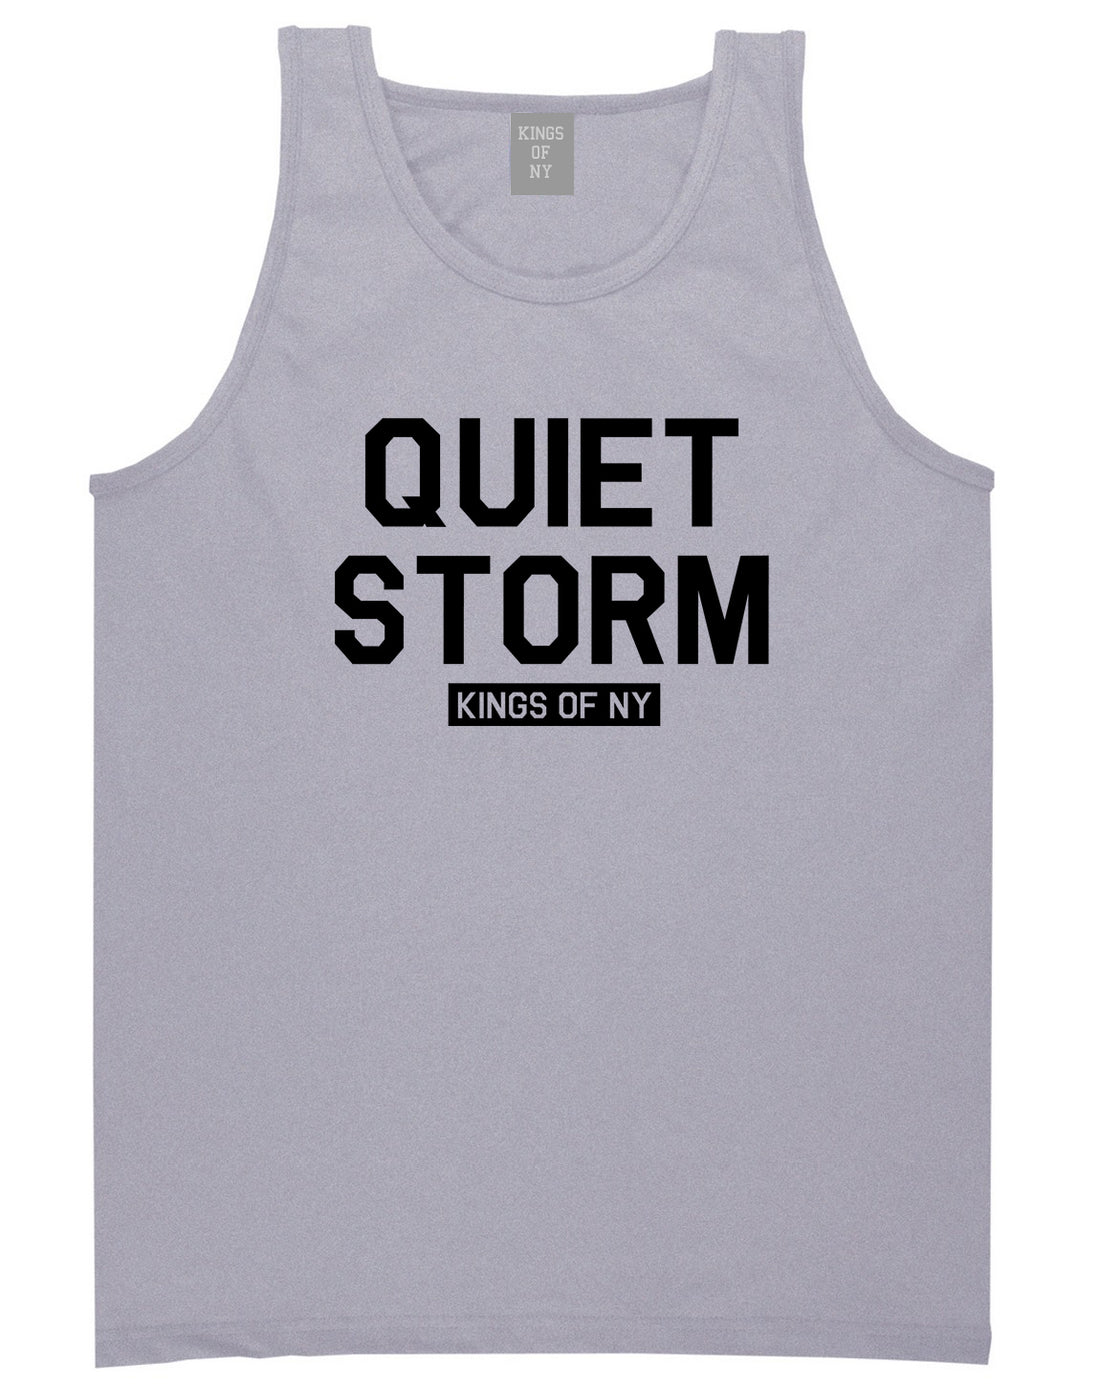 Quiet Storm Kings Of NY Mens Tank Top Shirt Grey